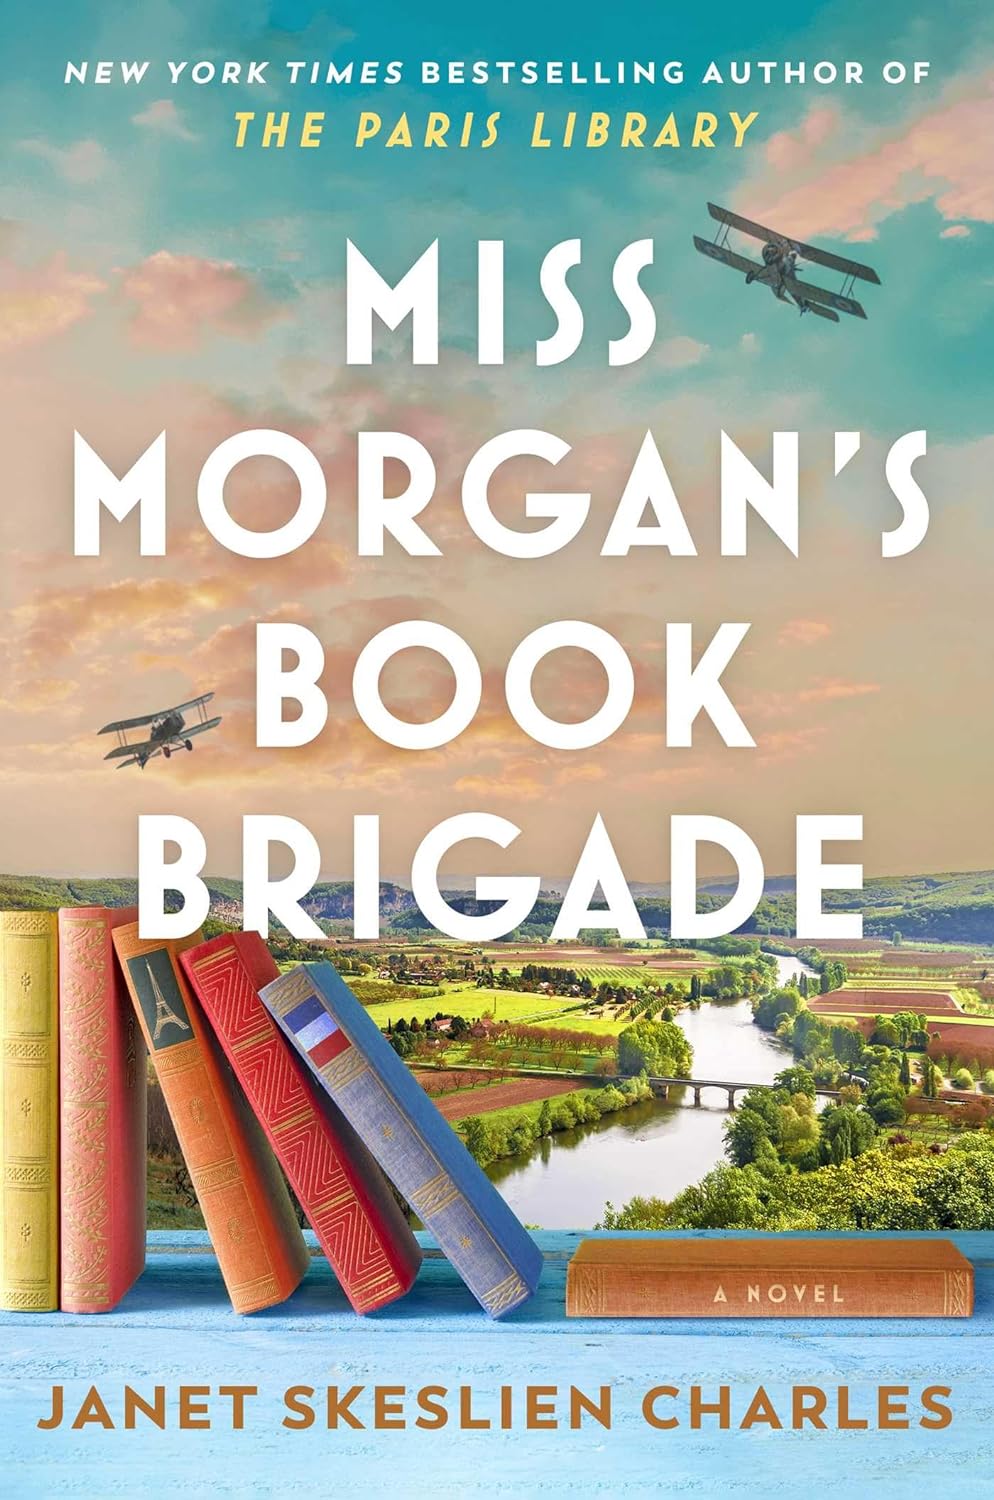 Image for "Miss Morgans Book Brigade"